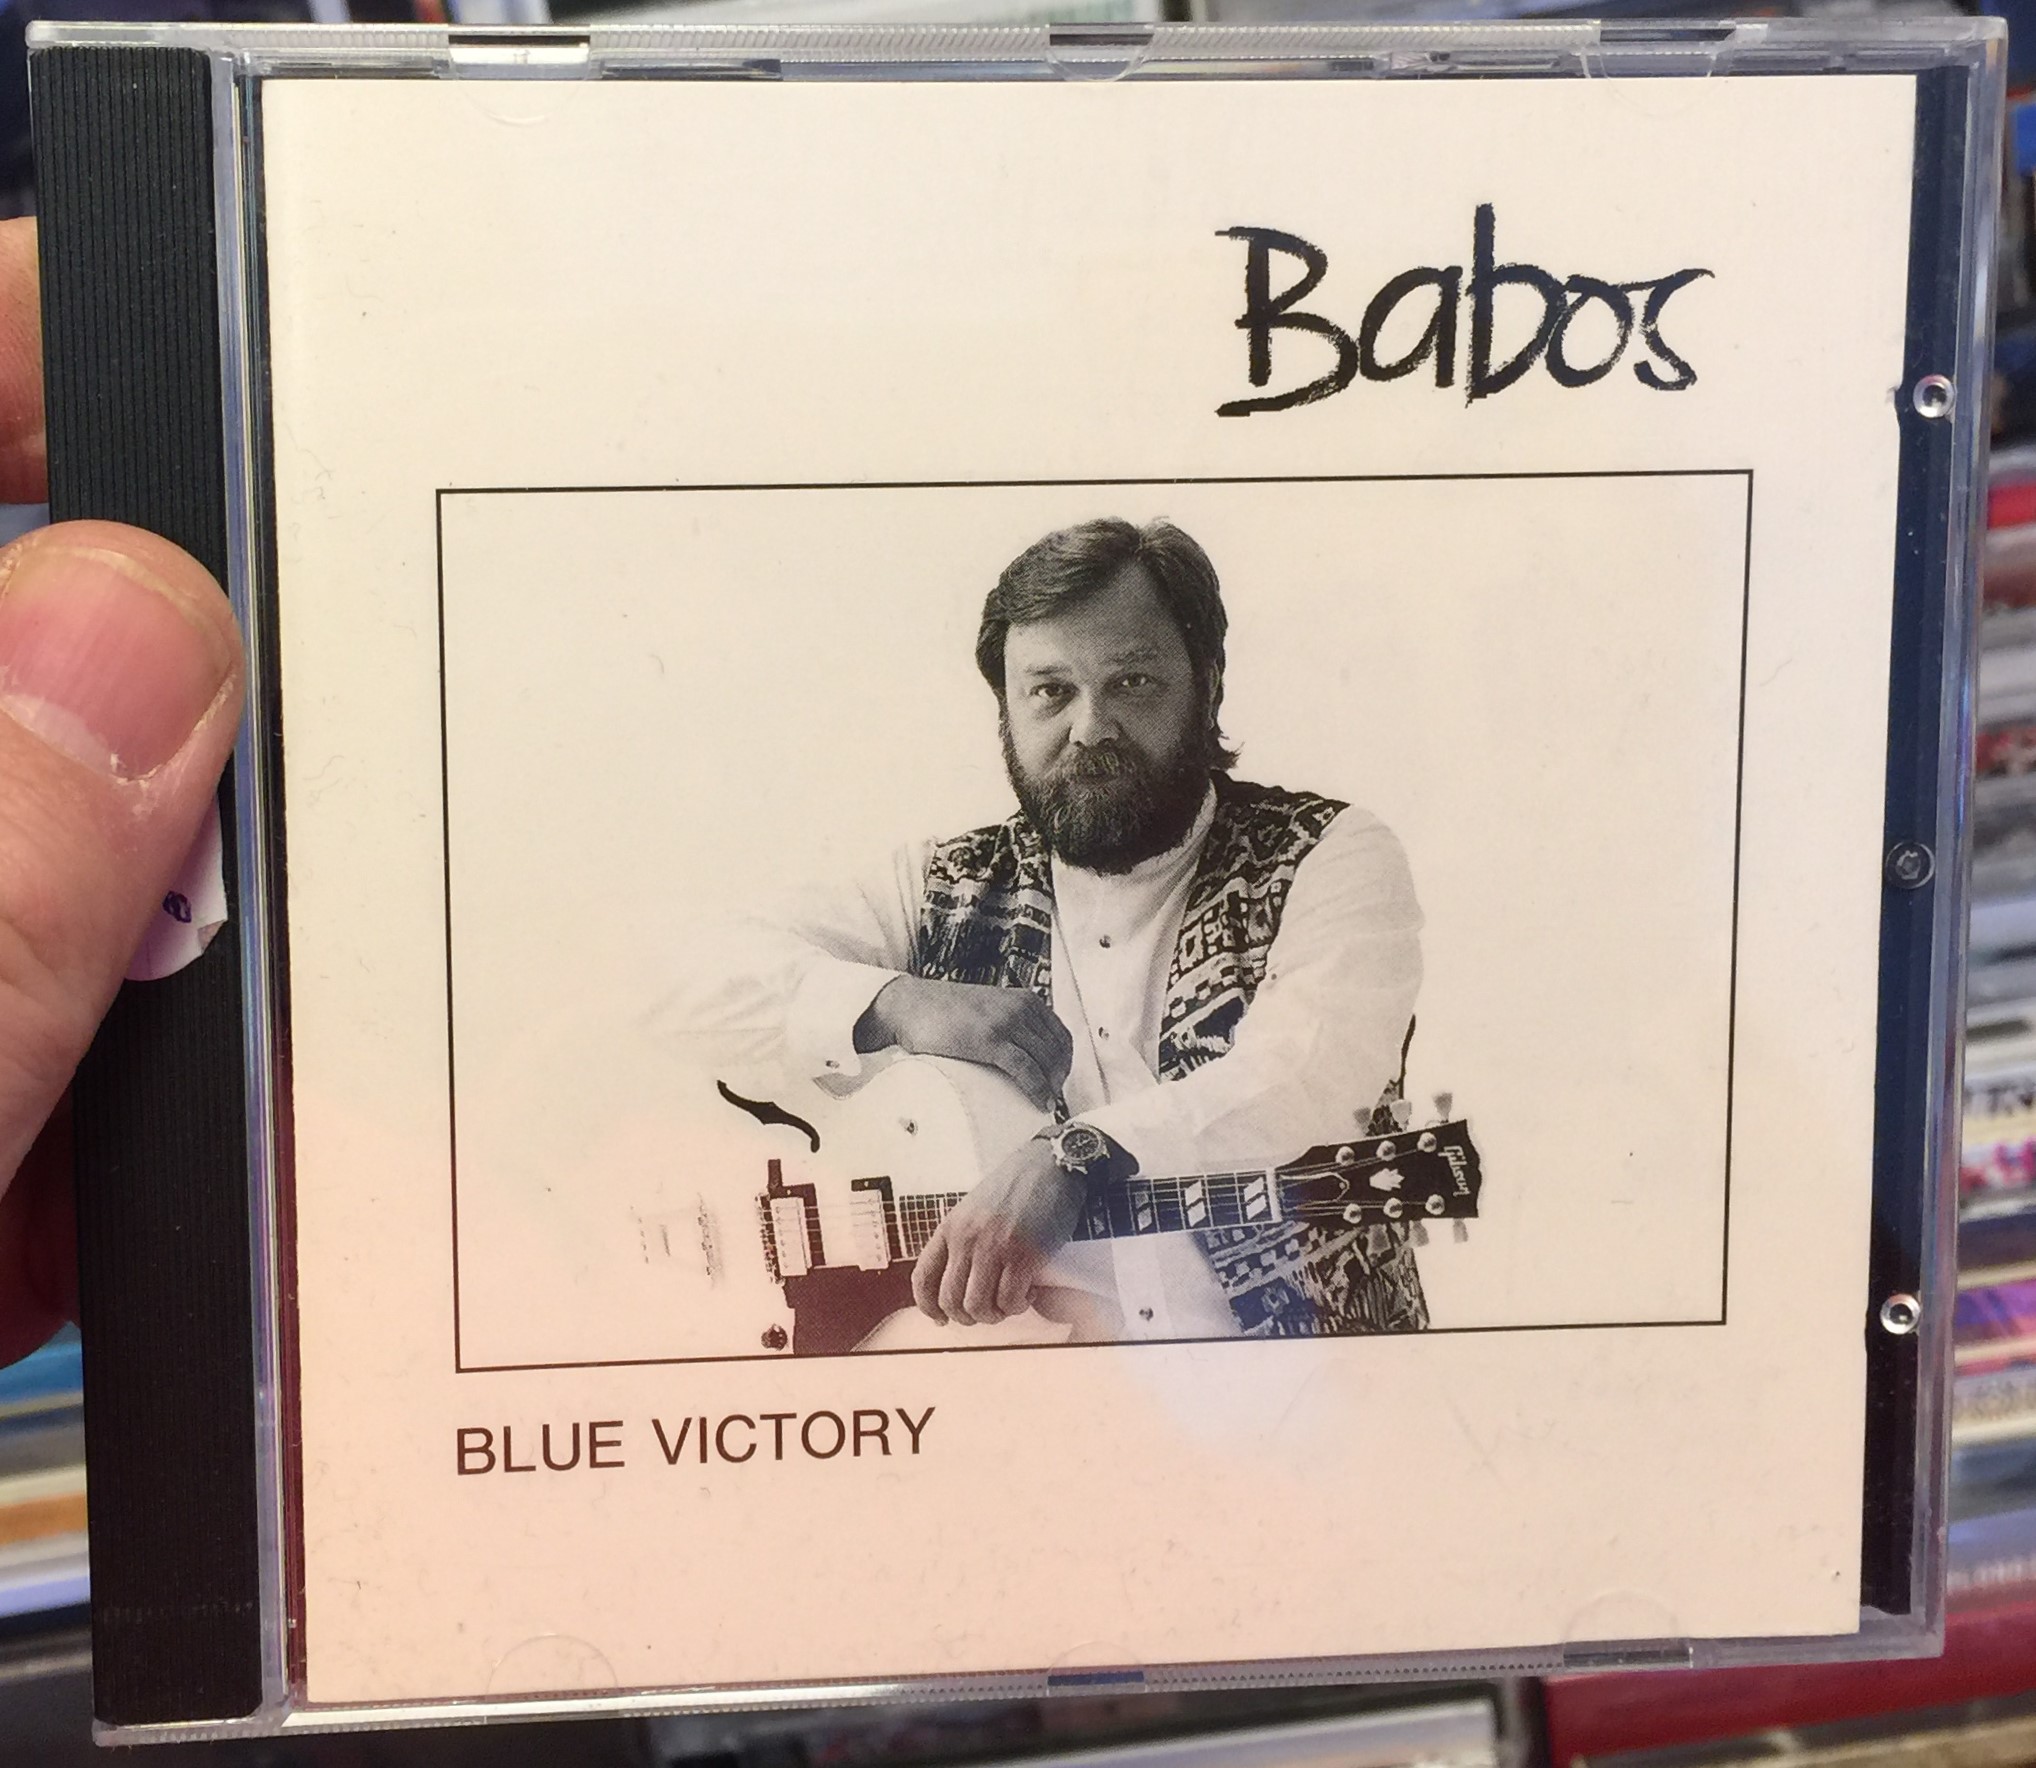 babos-blue-victory-columbia-audio-cd-1994-col-477891-2-1-.jpg